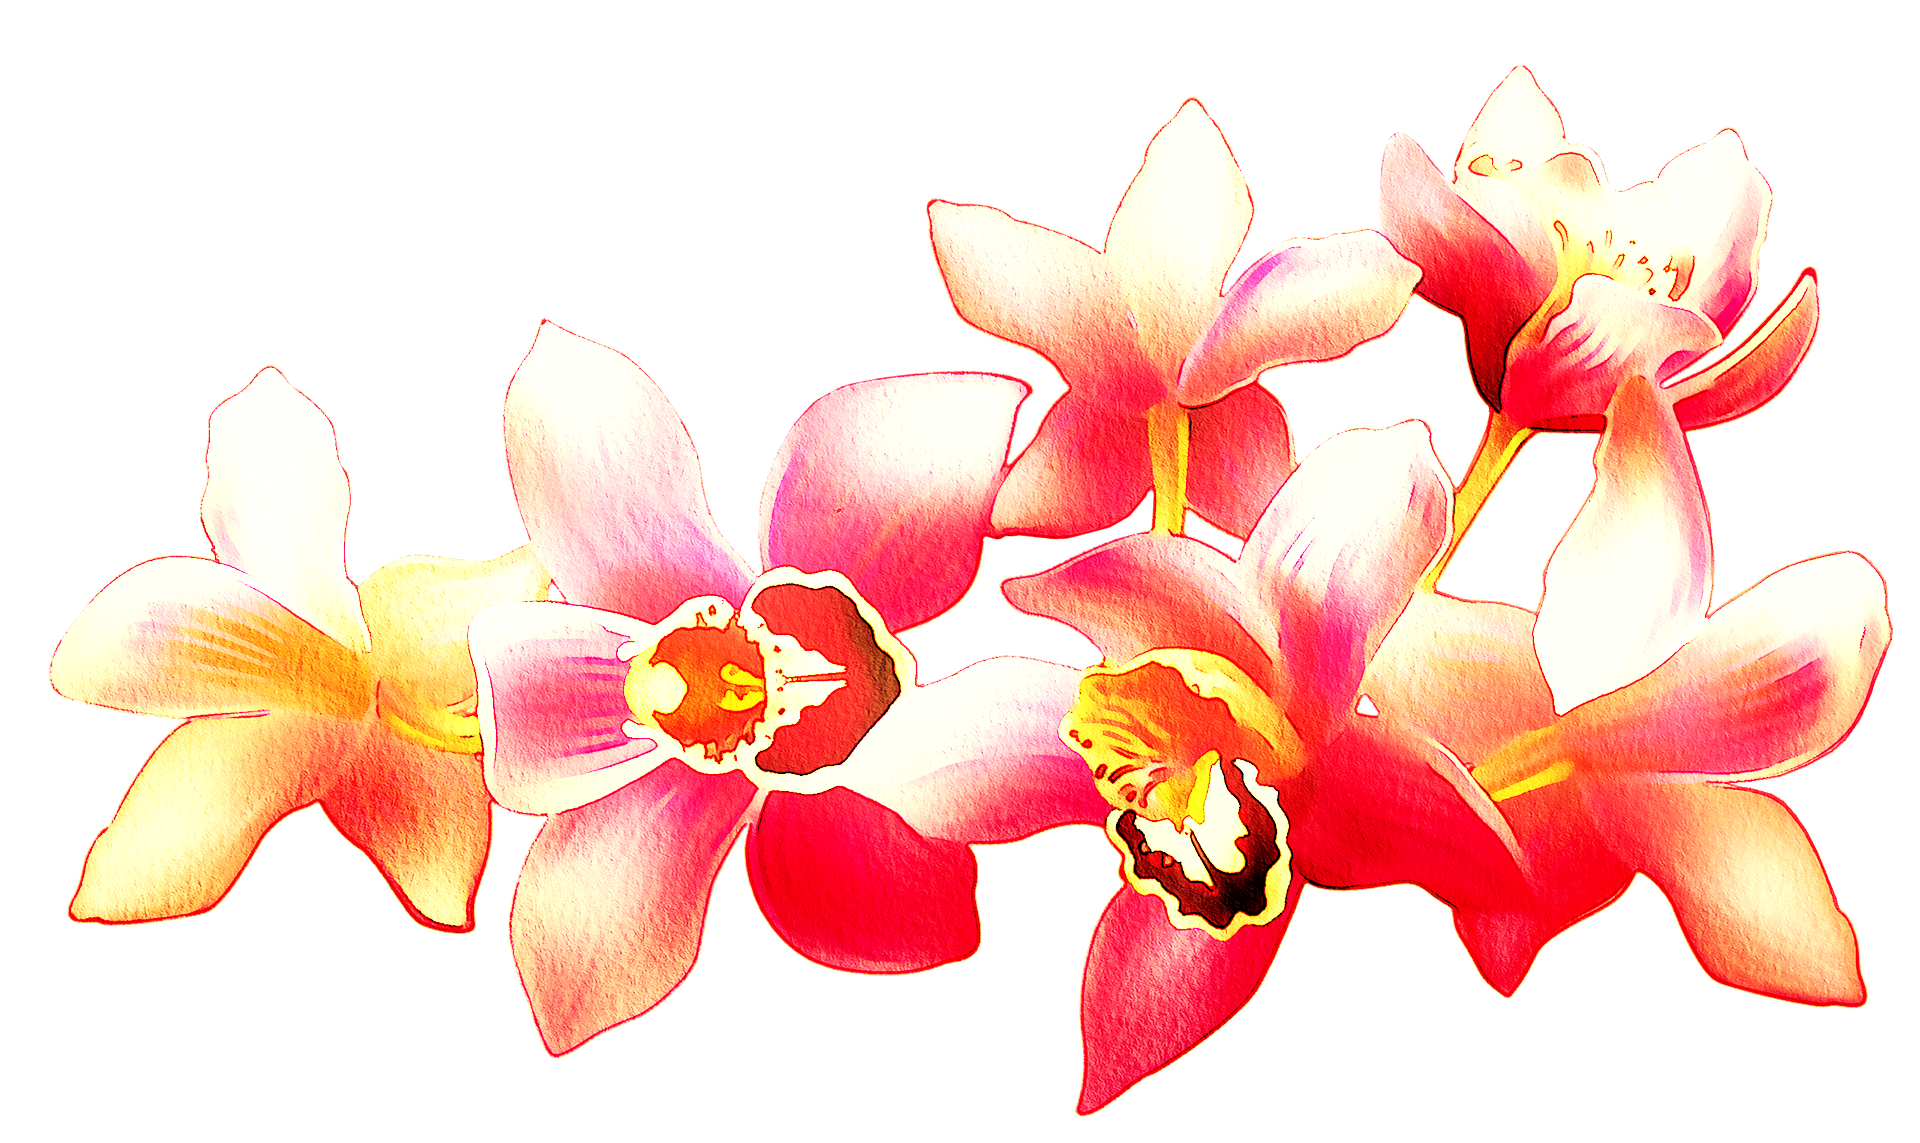 Clip Art: Flowers on a transparent background